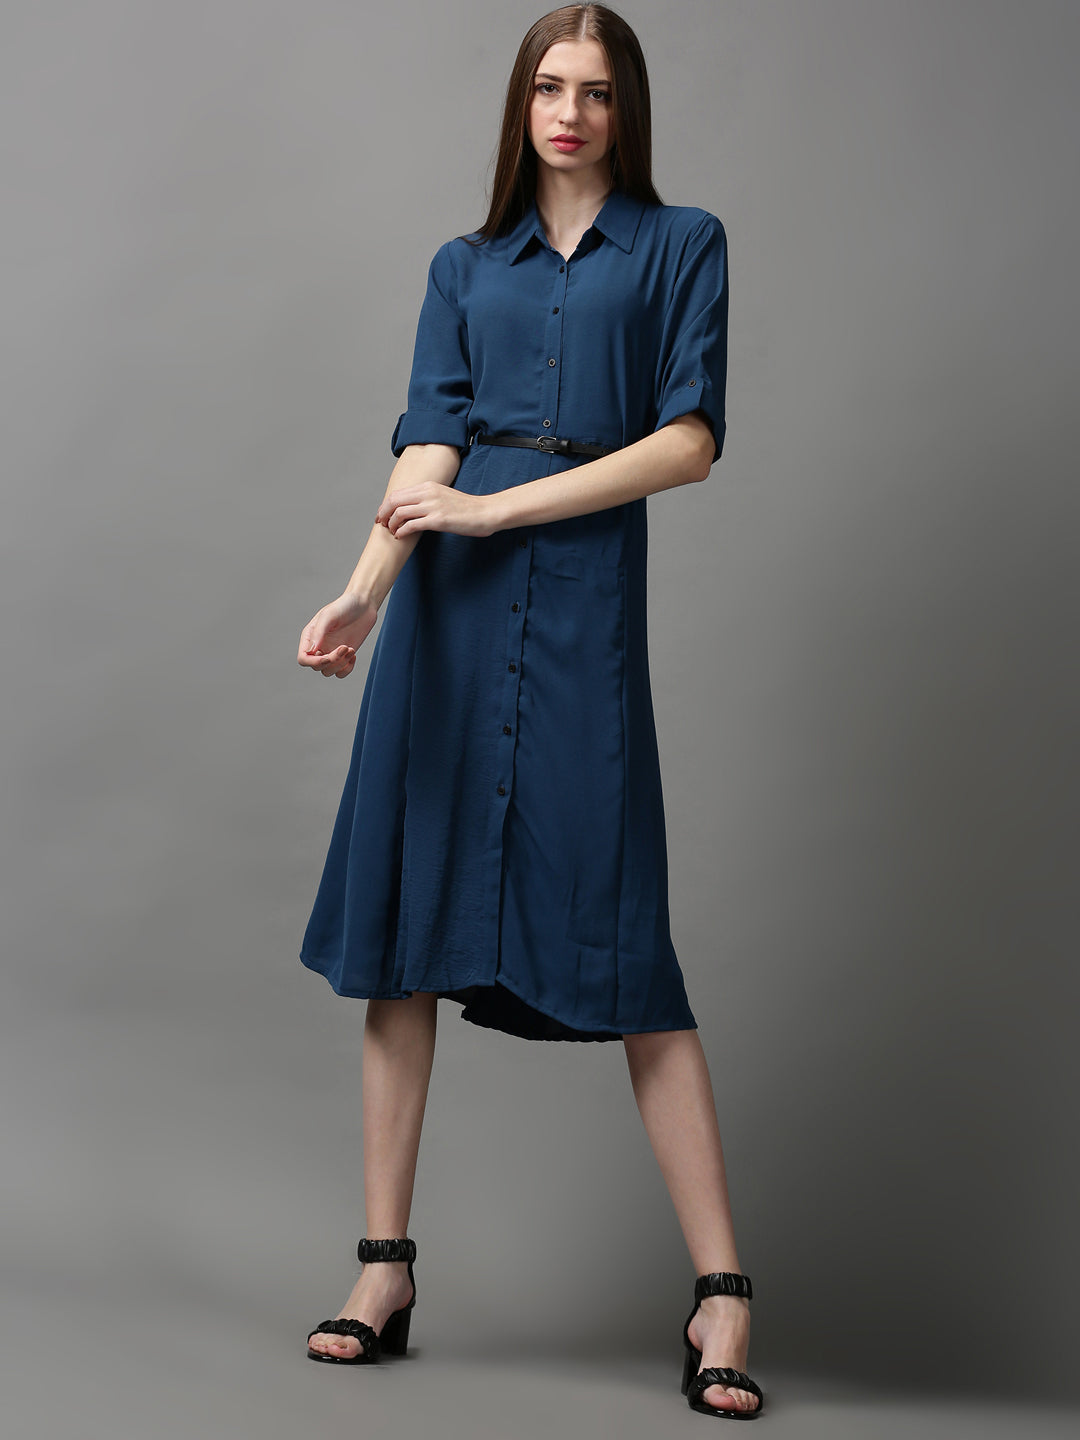 Women's Blue Solid A-Line Dress